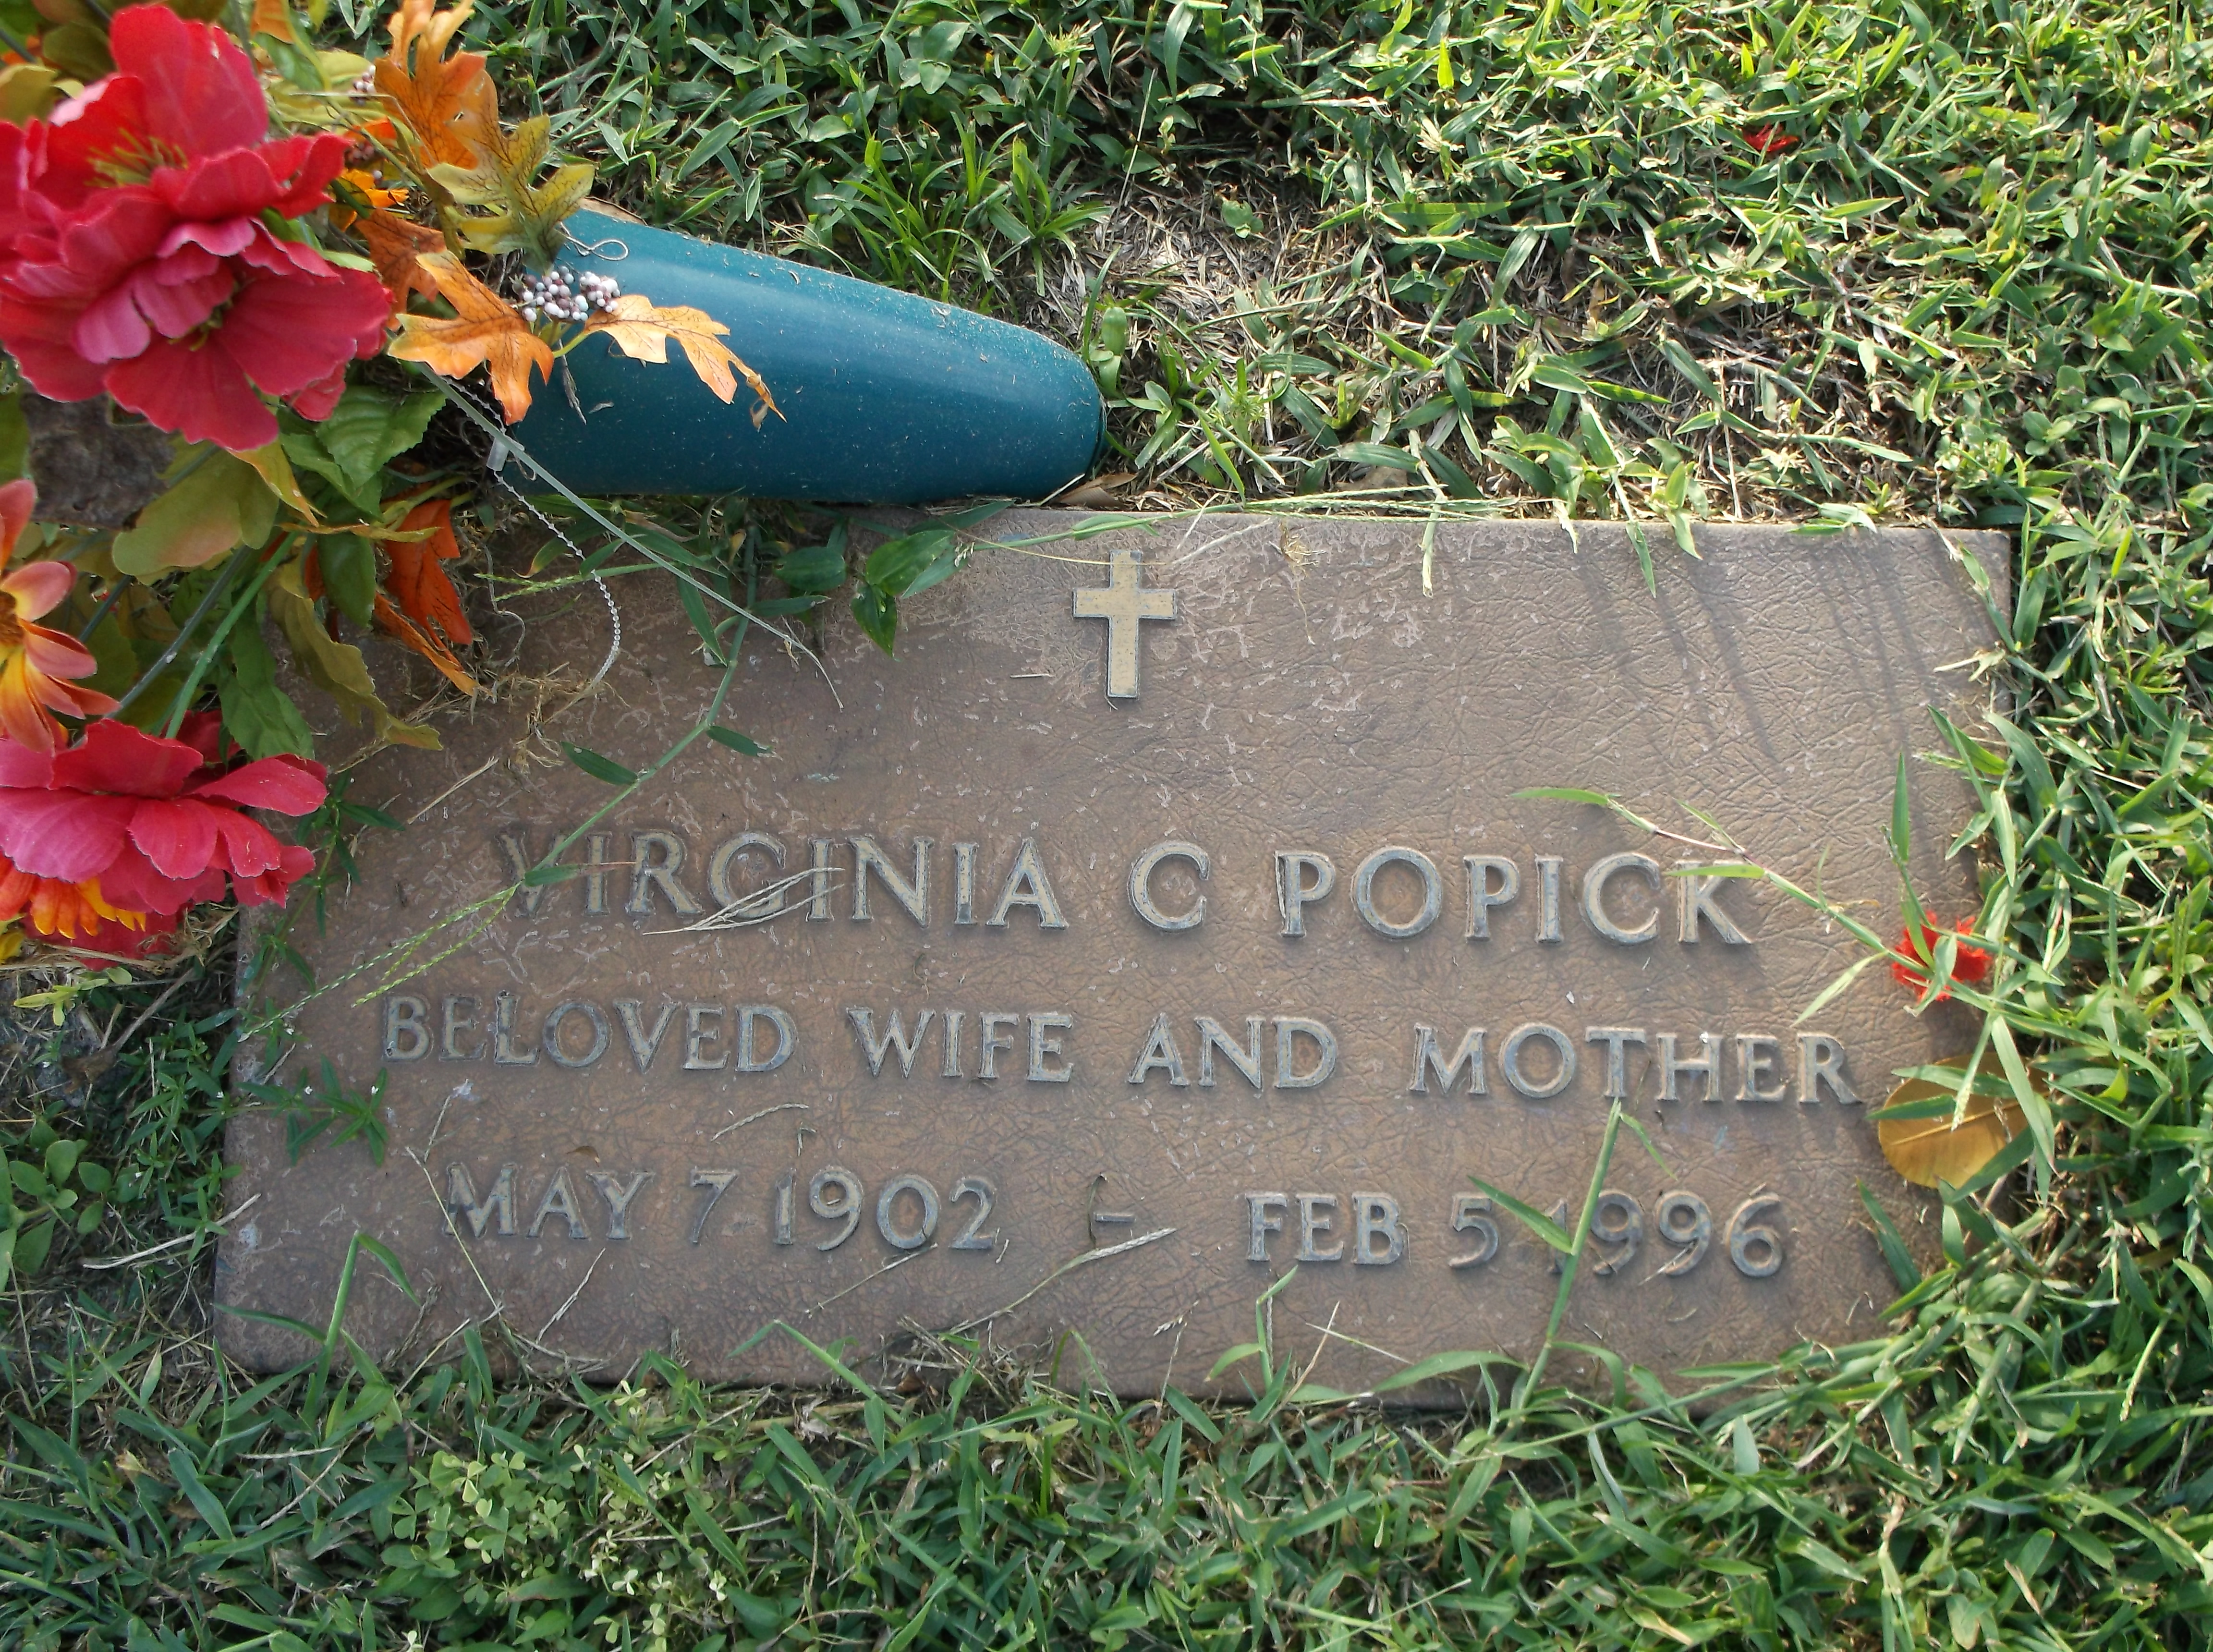 Virginia C Popick